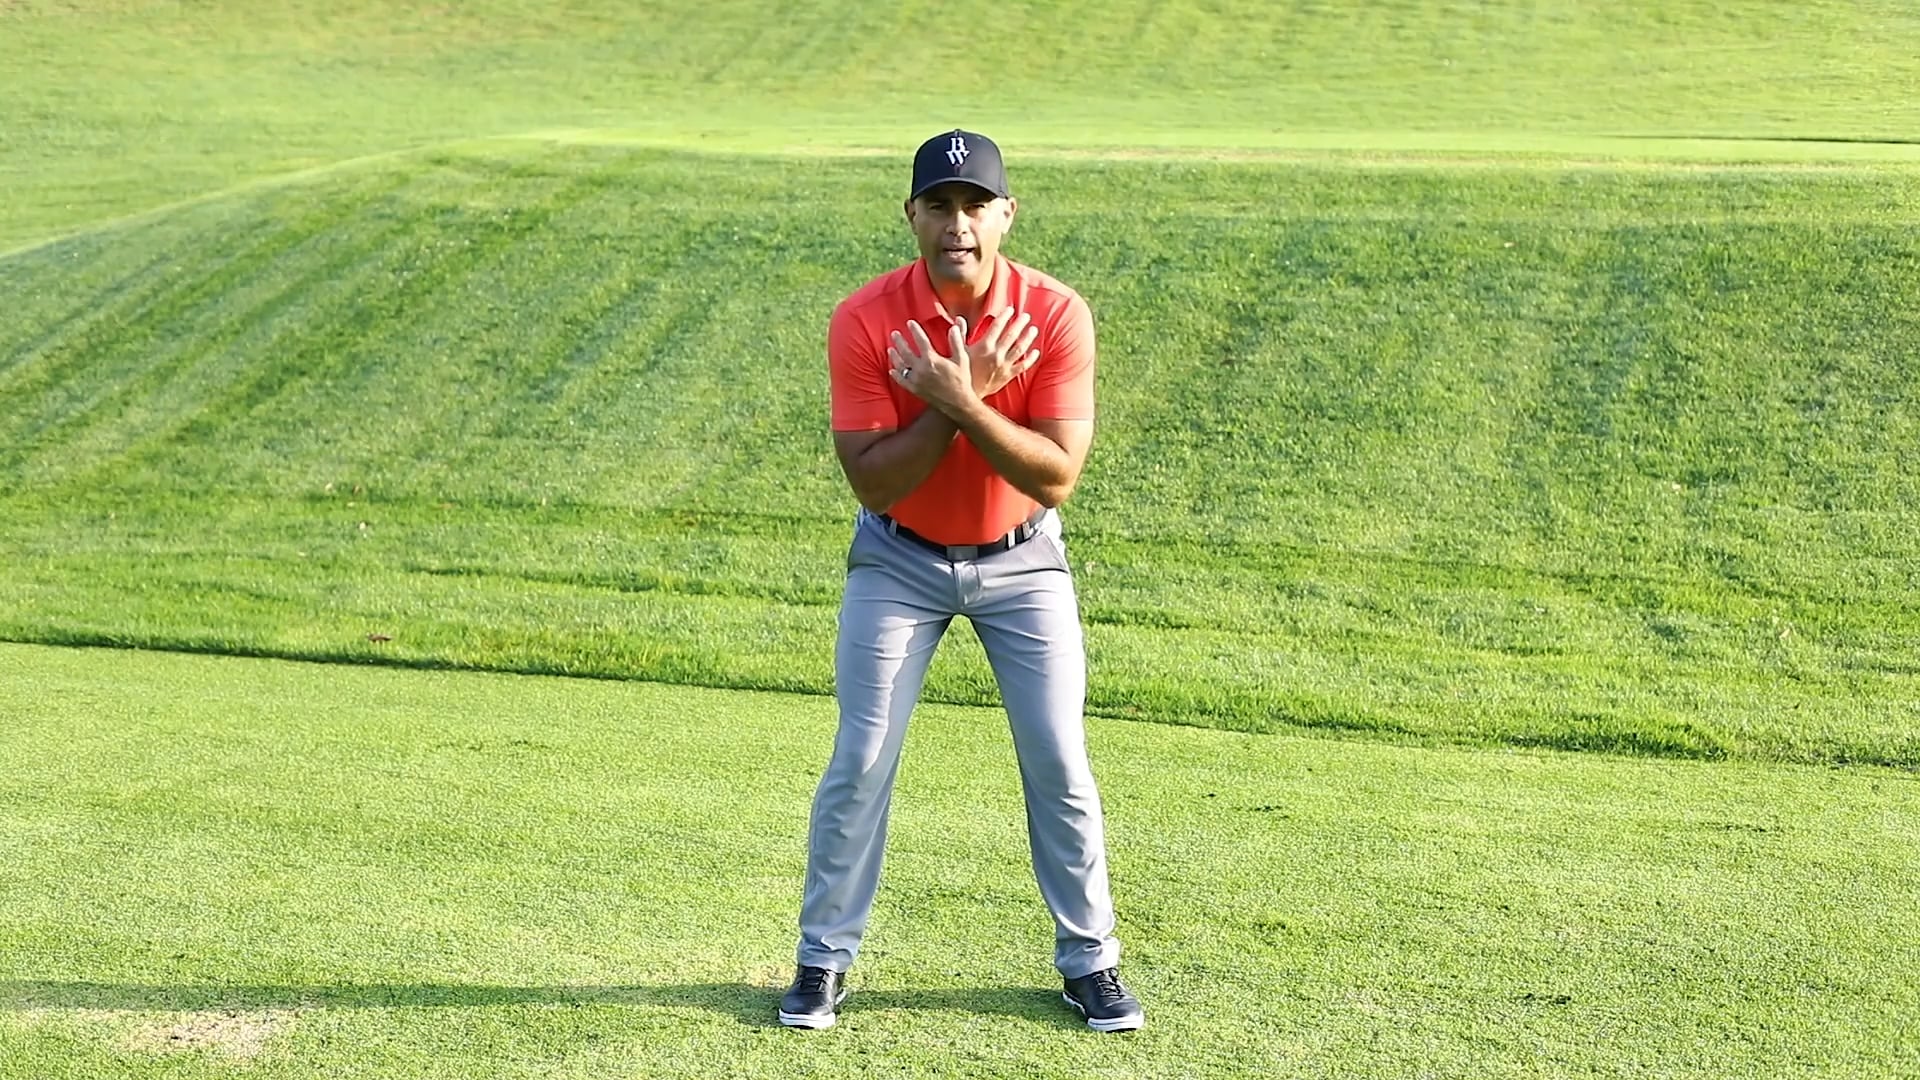 Golf upper body position demonstration